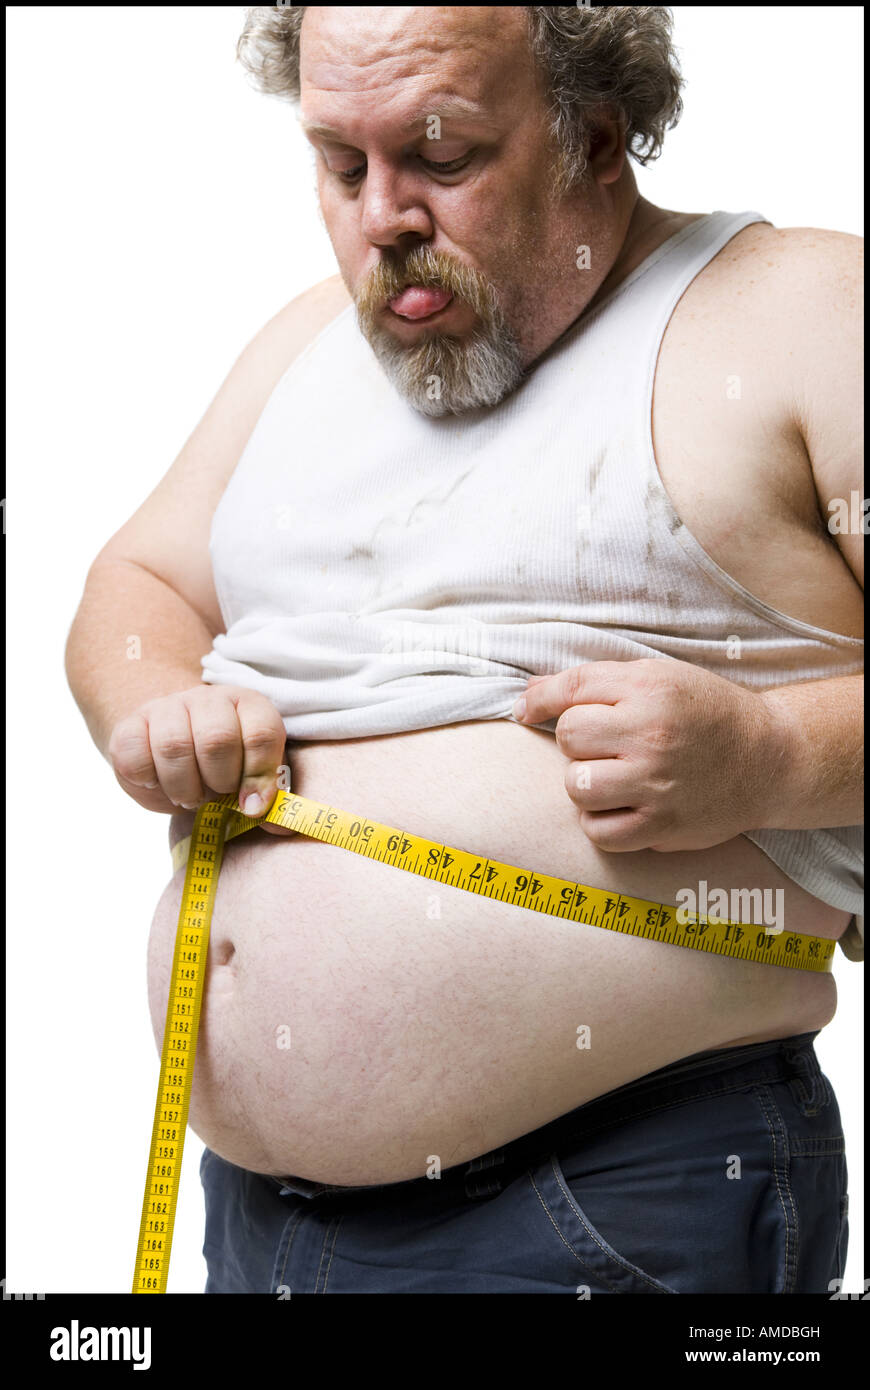 https://c8.alamy.com/comp/AMDBGH/obese-man-measuring-waist-with-tape-measure-AMDBGH.jpg